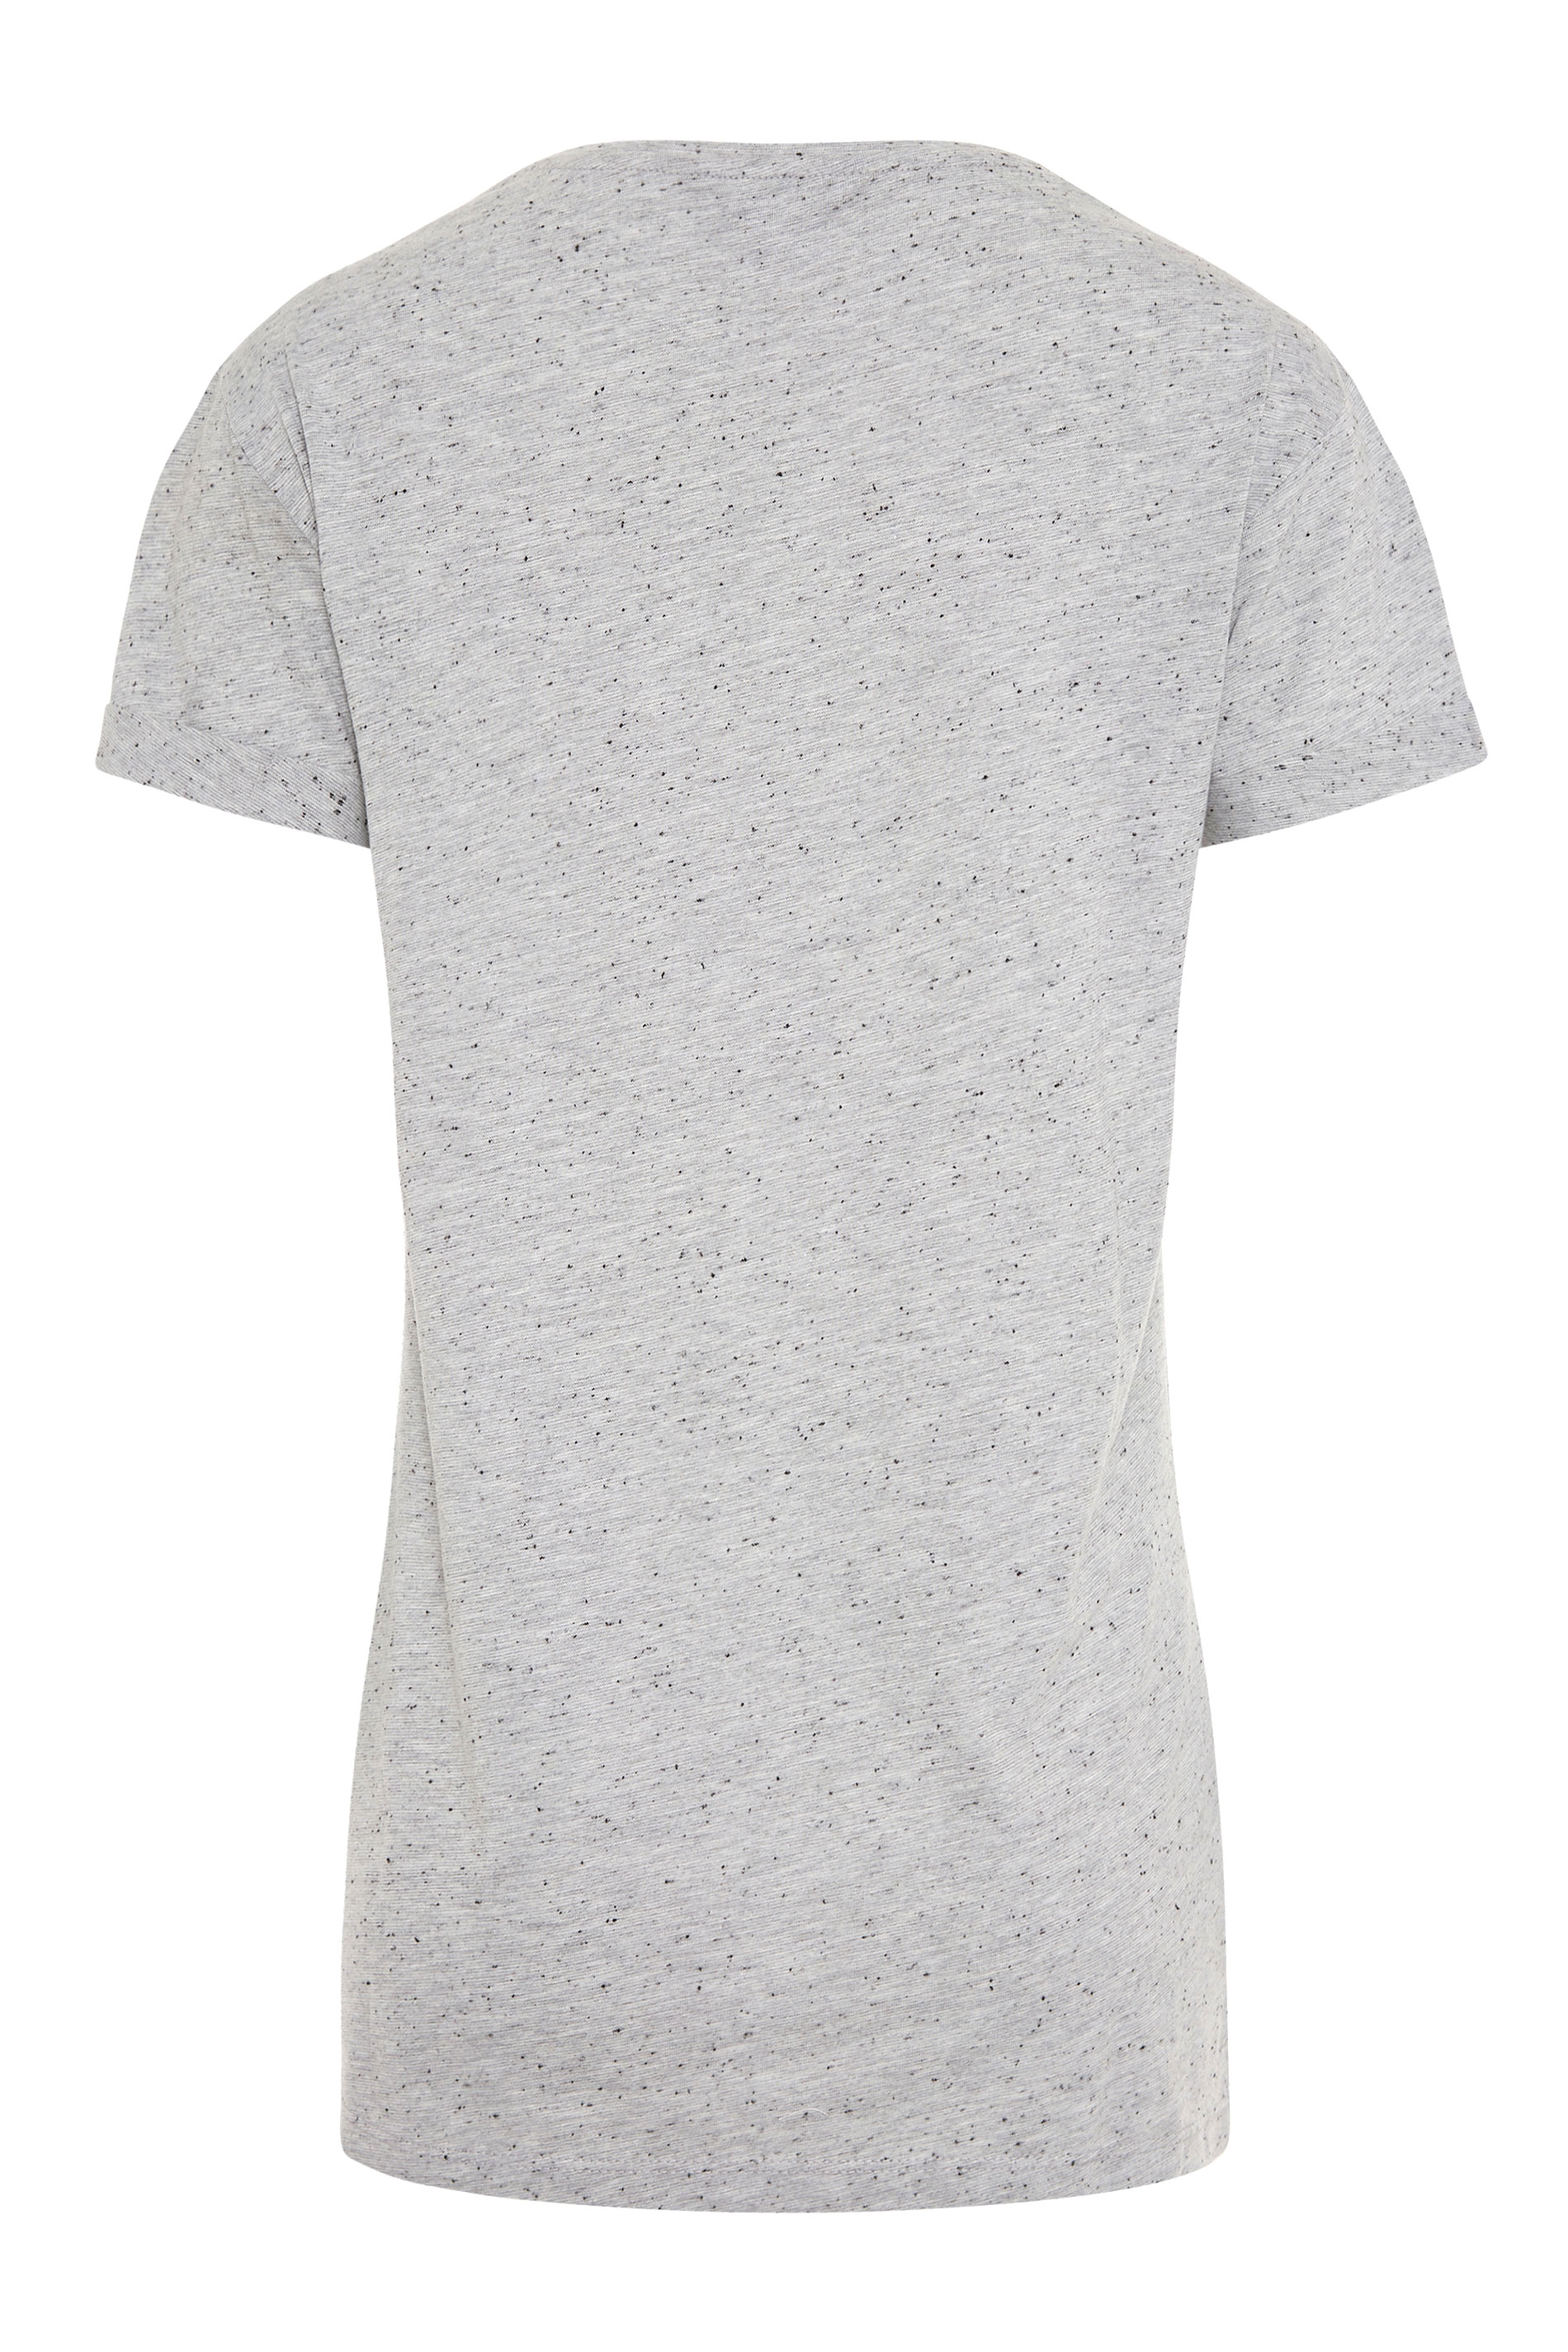 LTS Grey Pocket T-Shirt | Long Tall Sally